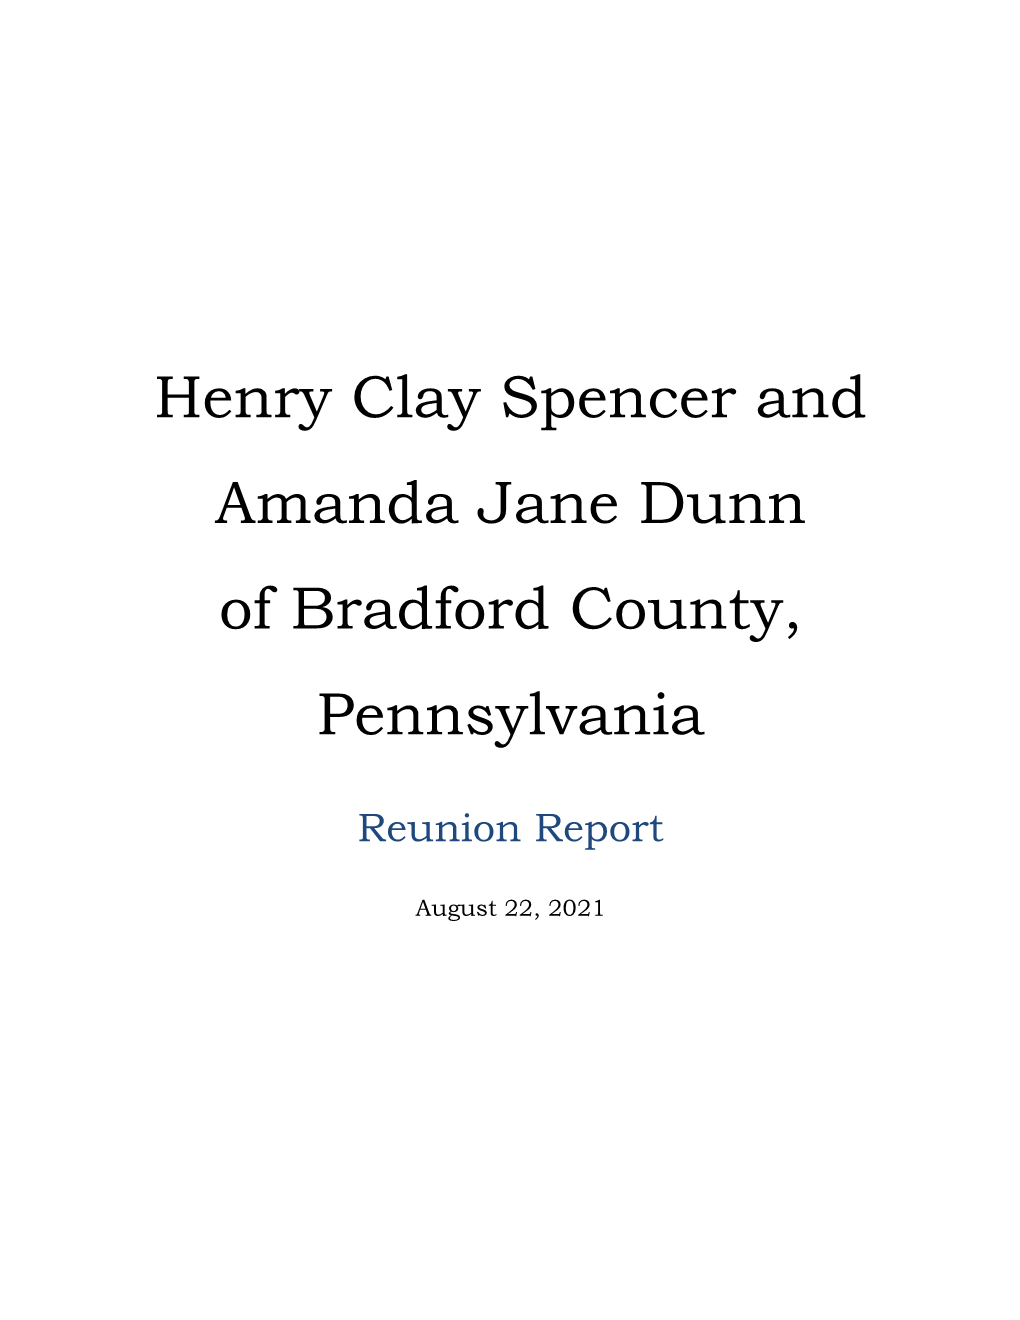 Henry Clay Spencer and Amanda Jane Dunn of Bradford County, Pennsylvania